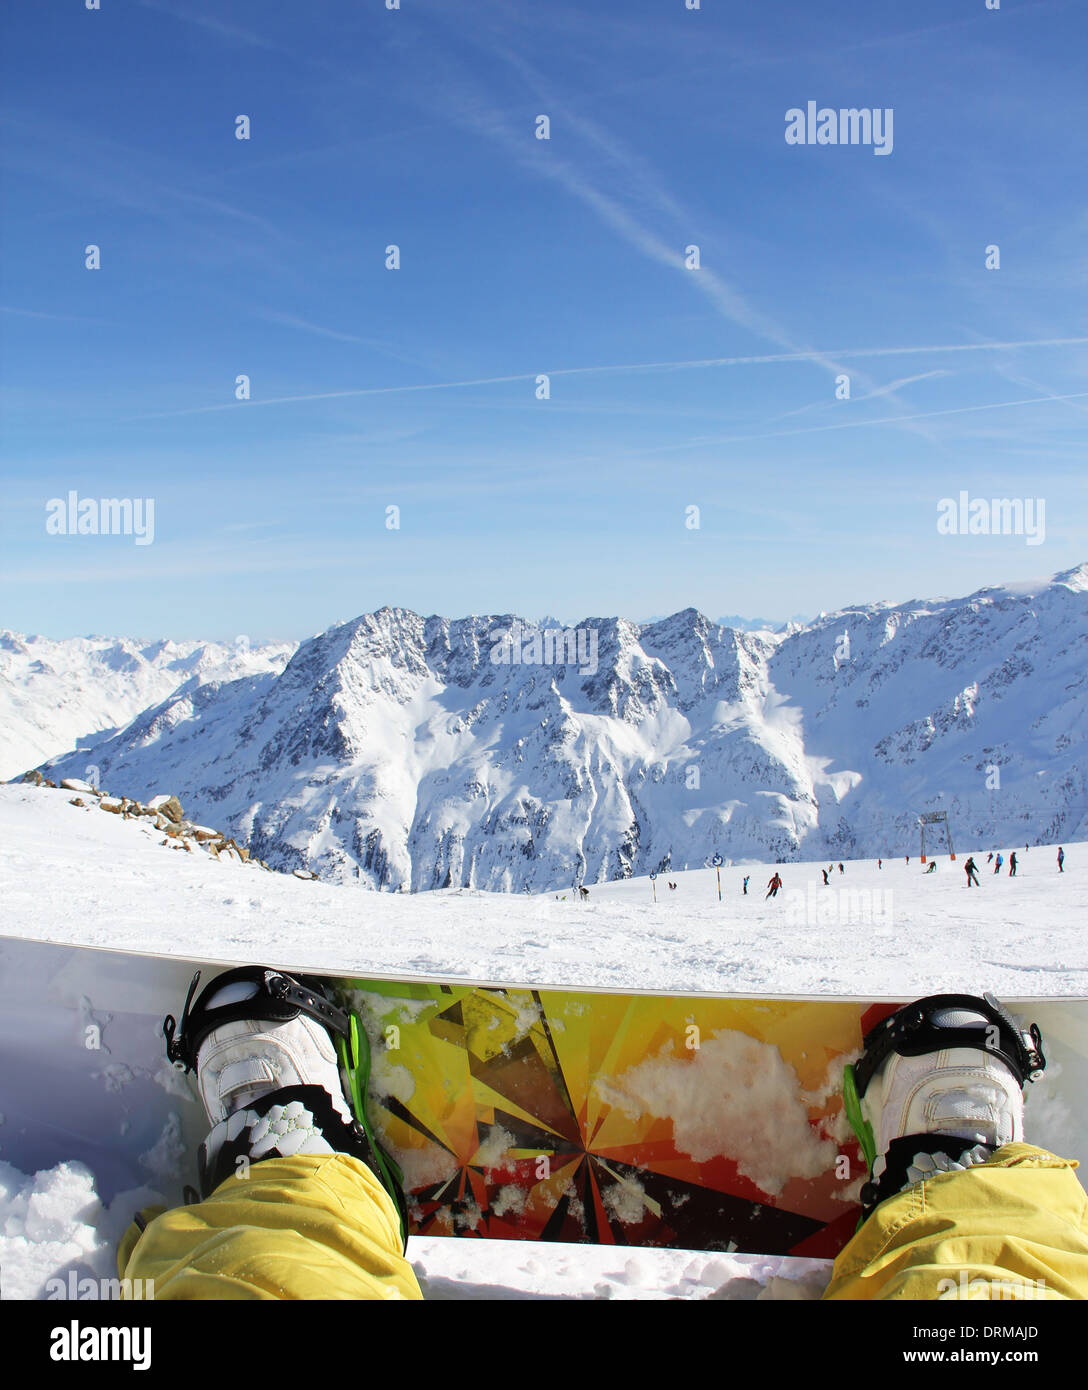 snowboarder sitting on snow Stock Photo